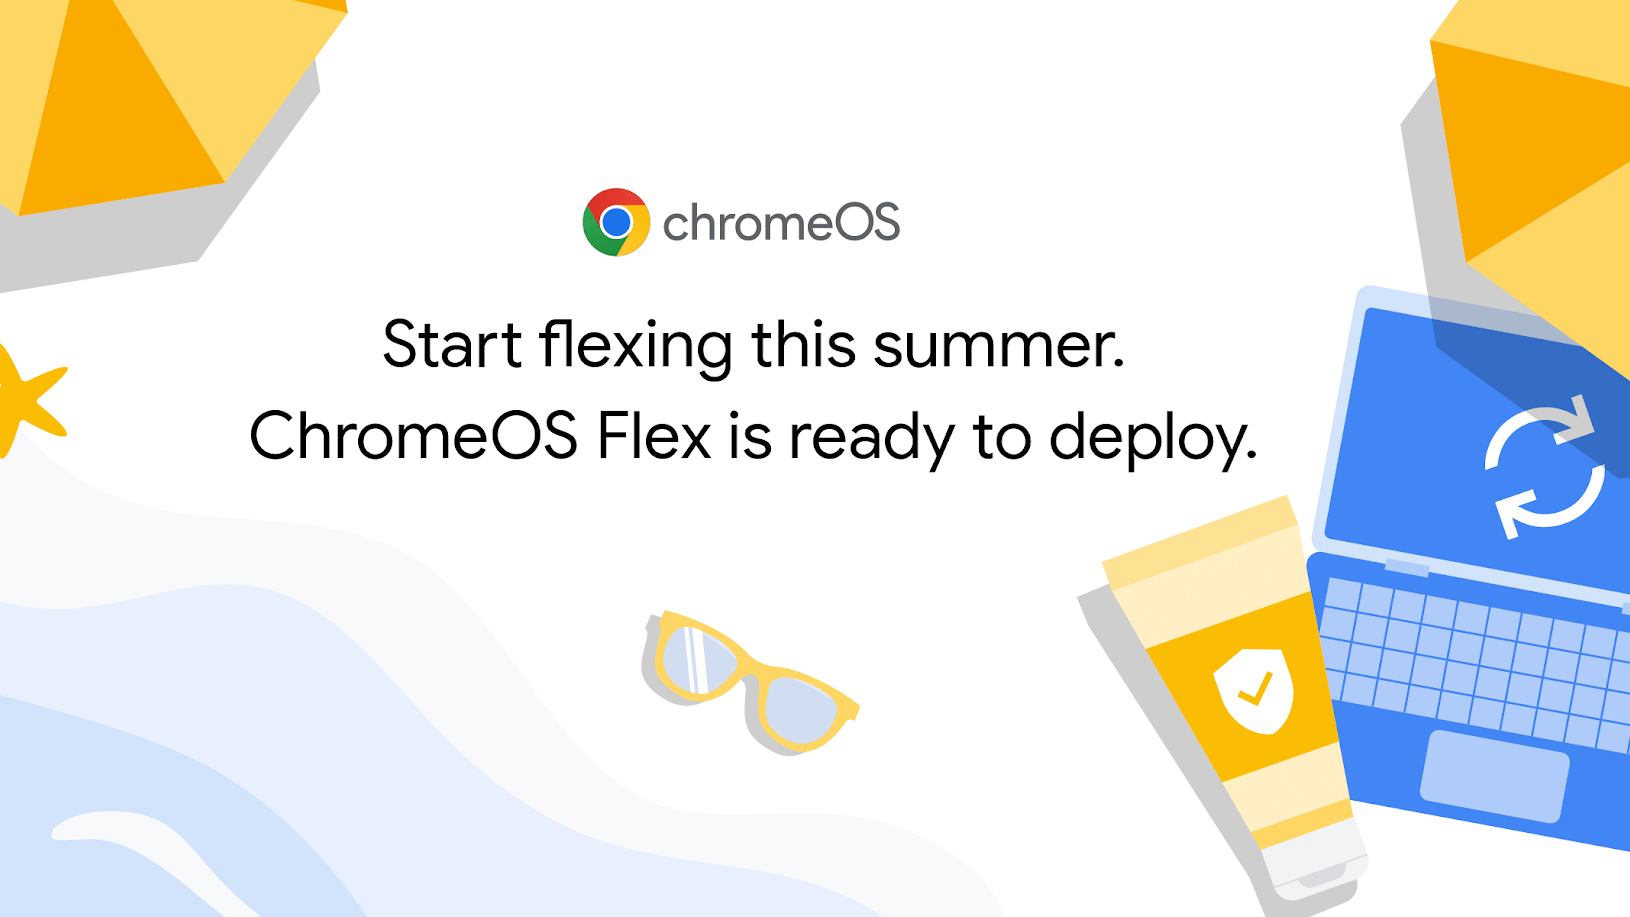 A banner for Google's ChromeOS Flex software